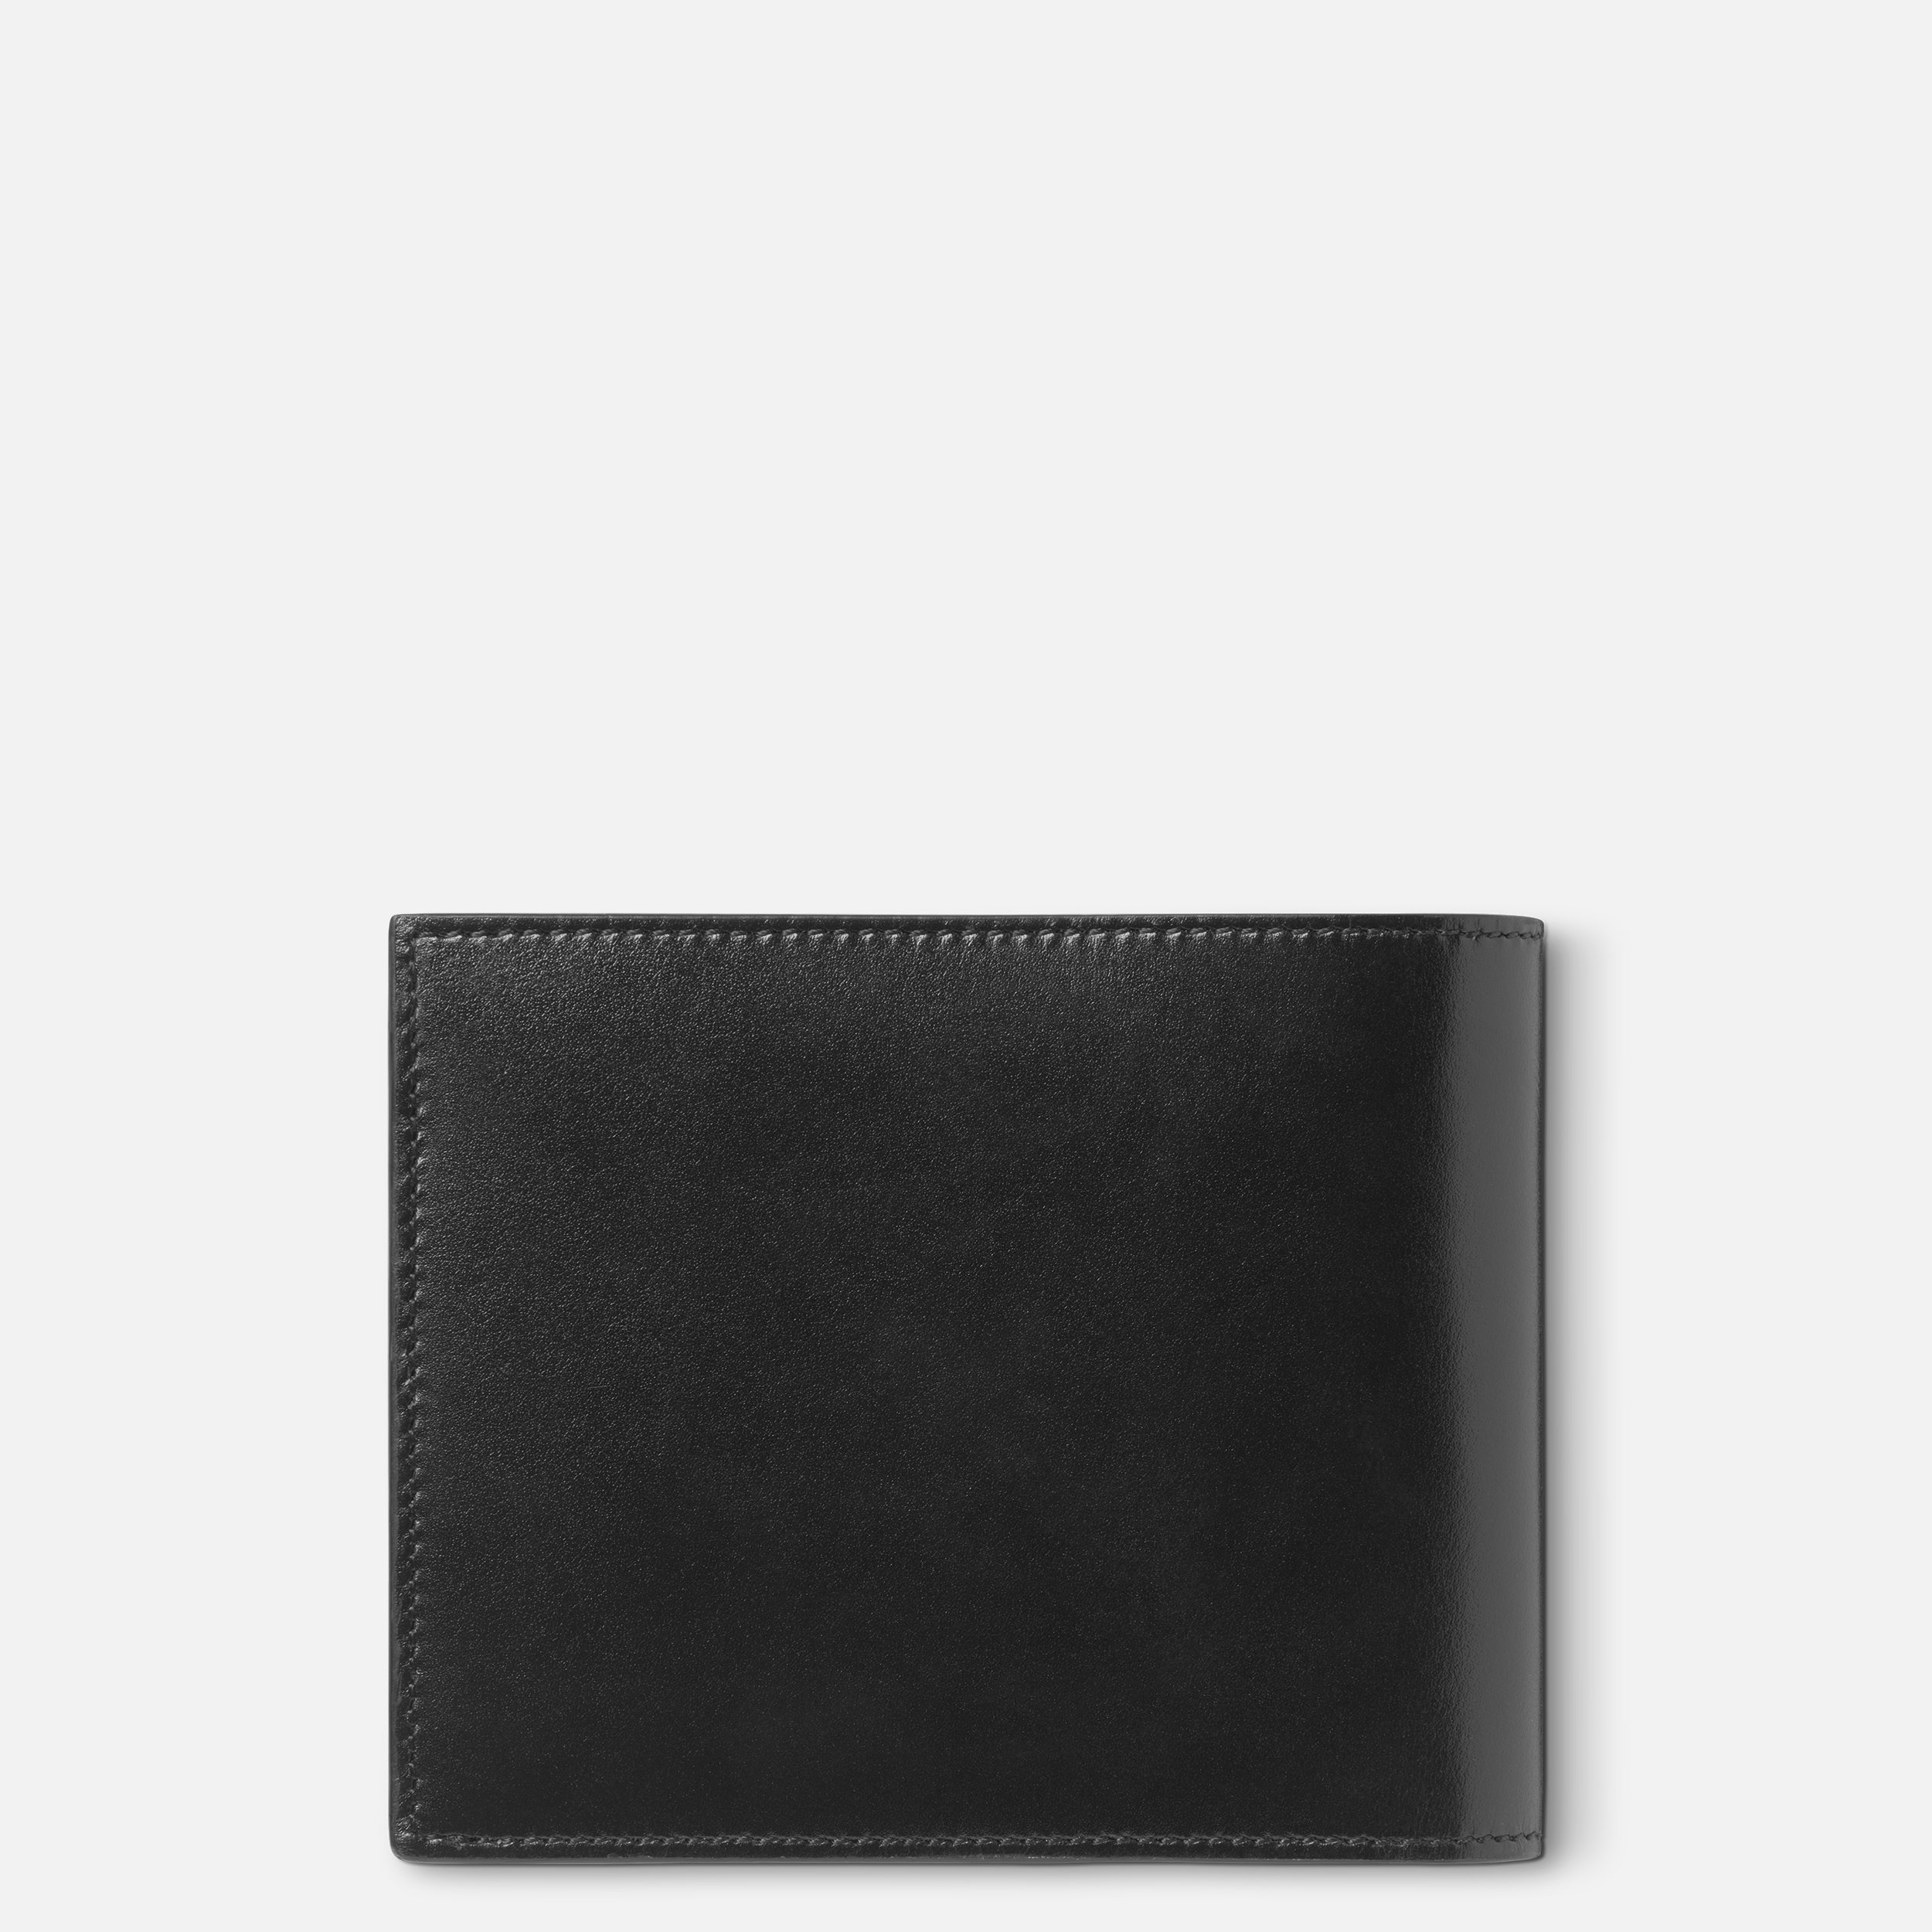 Meisterstück wallet 10cc with coin case - 3